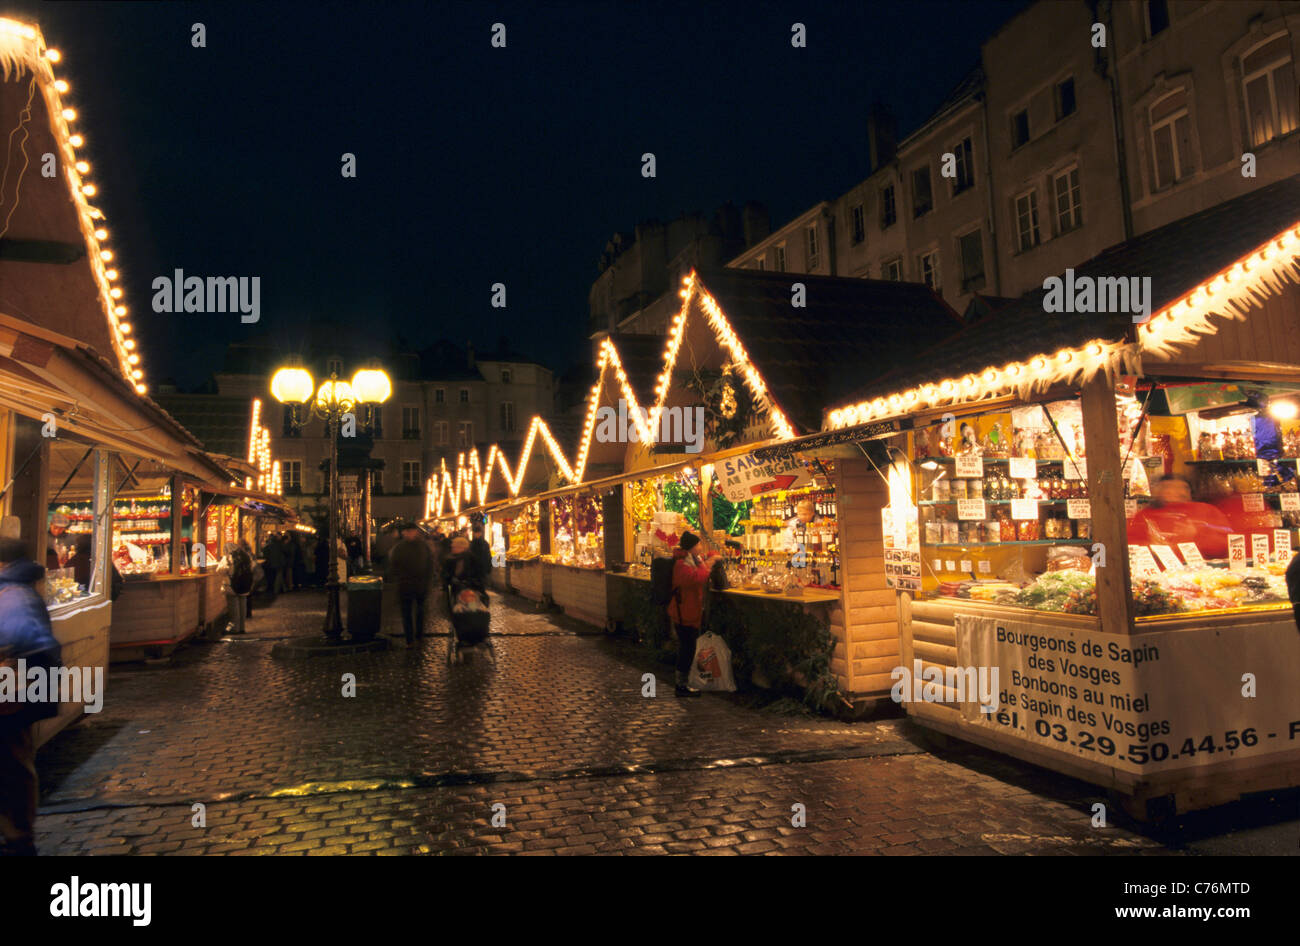 Christmas market, PLace St Louis, Metz, Lorraine region, France Stock Photo  - Alamy